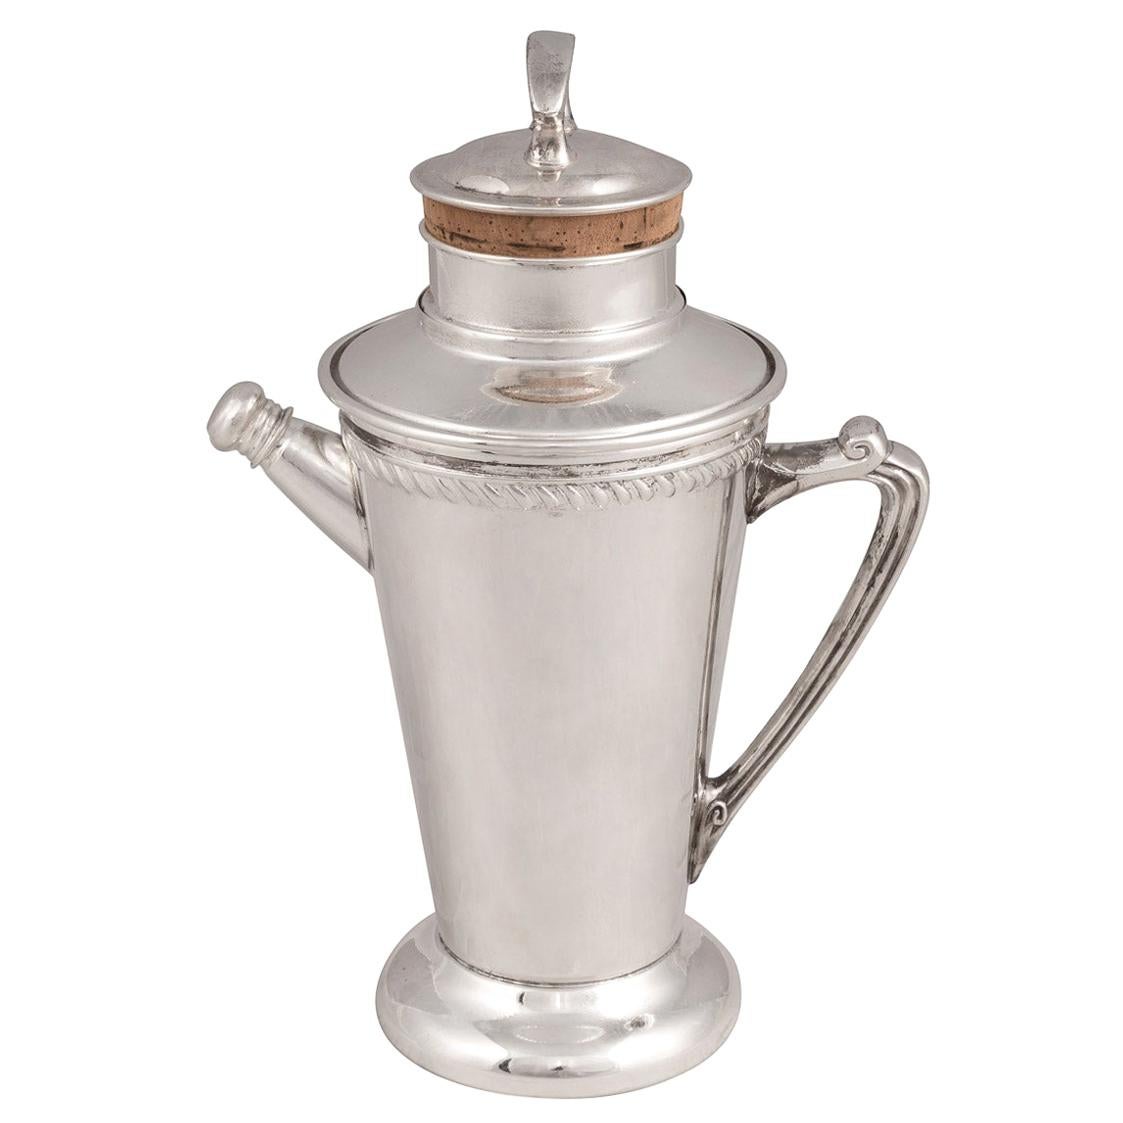 20th Century American Silver Plated "Recipe" Cocktail Shaker, circa 1930